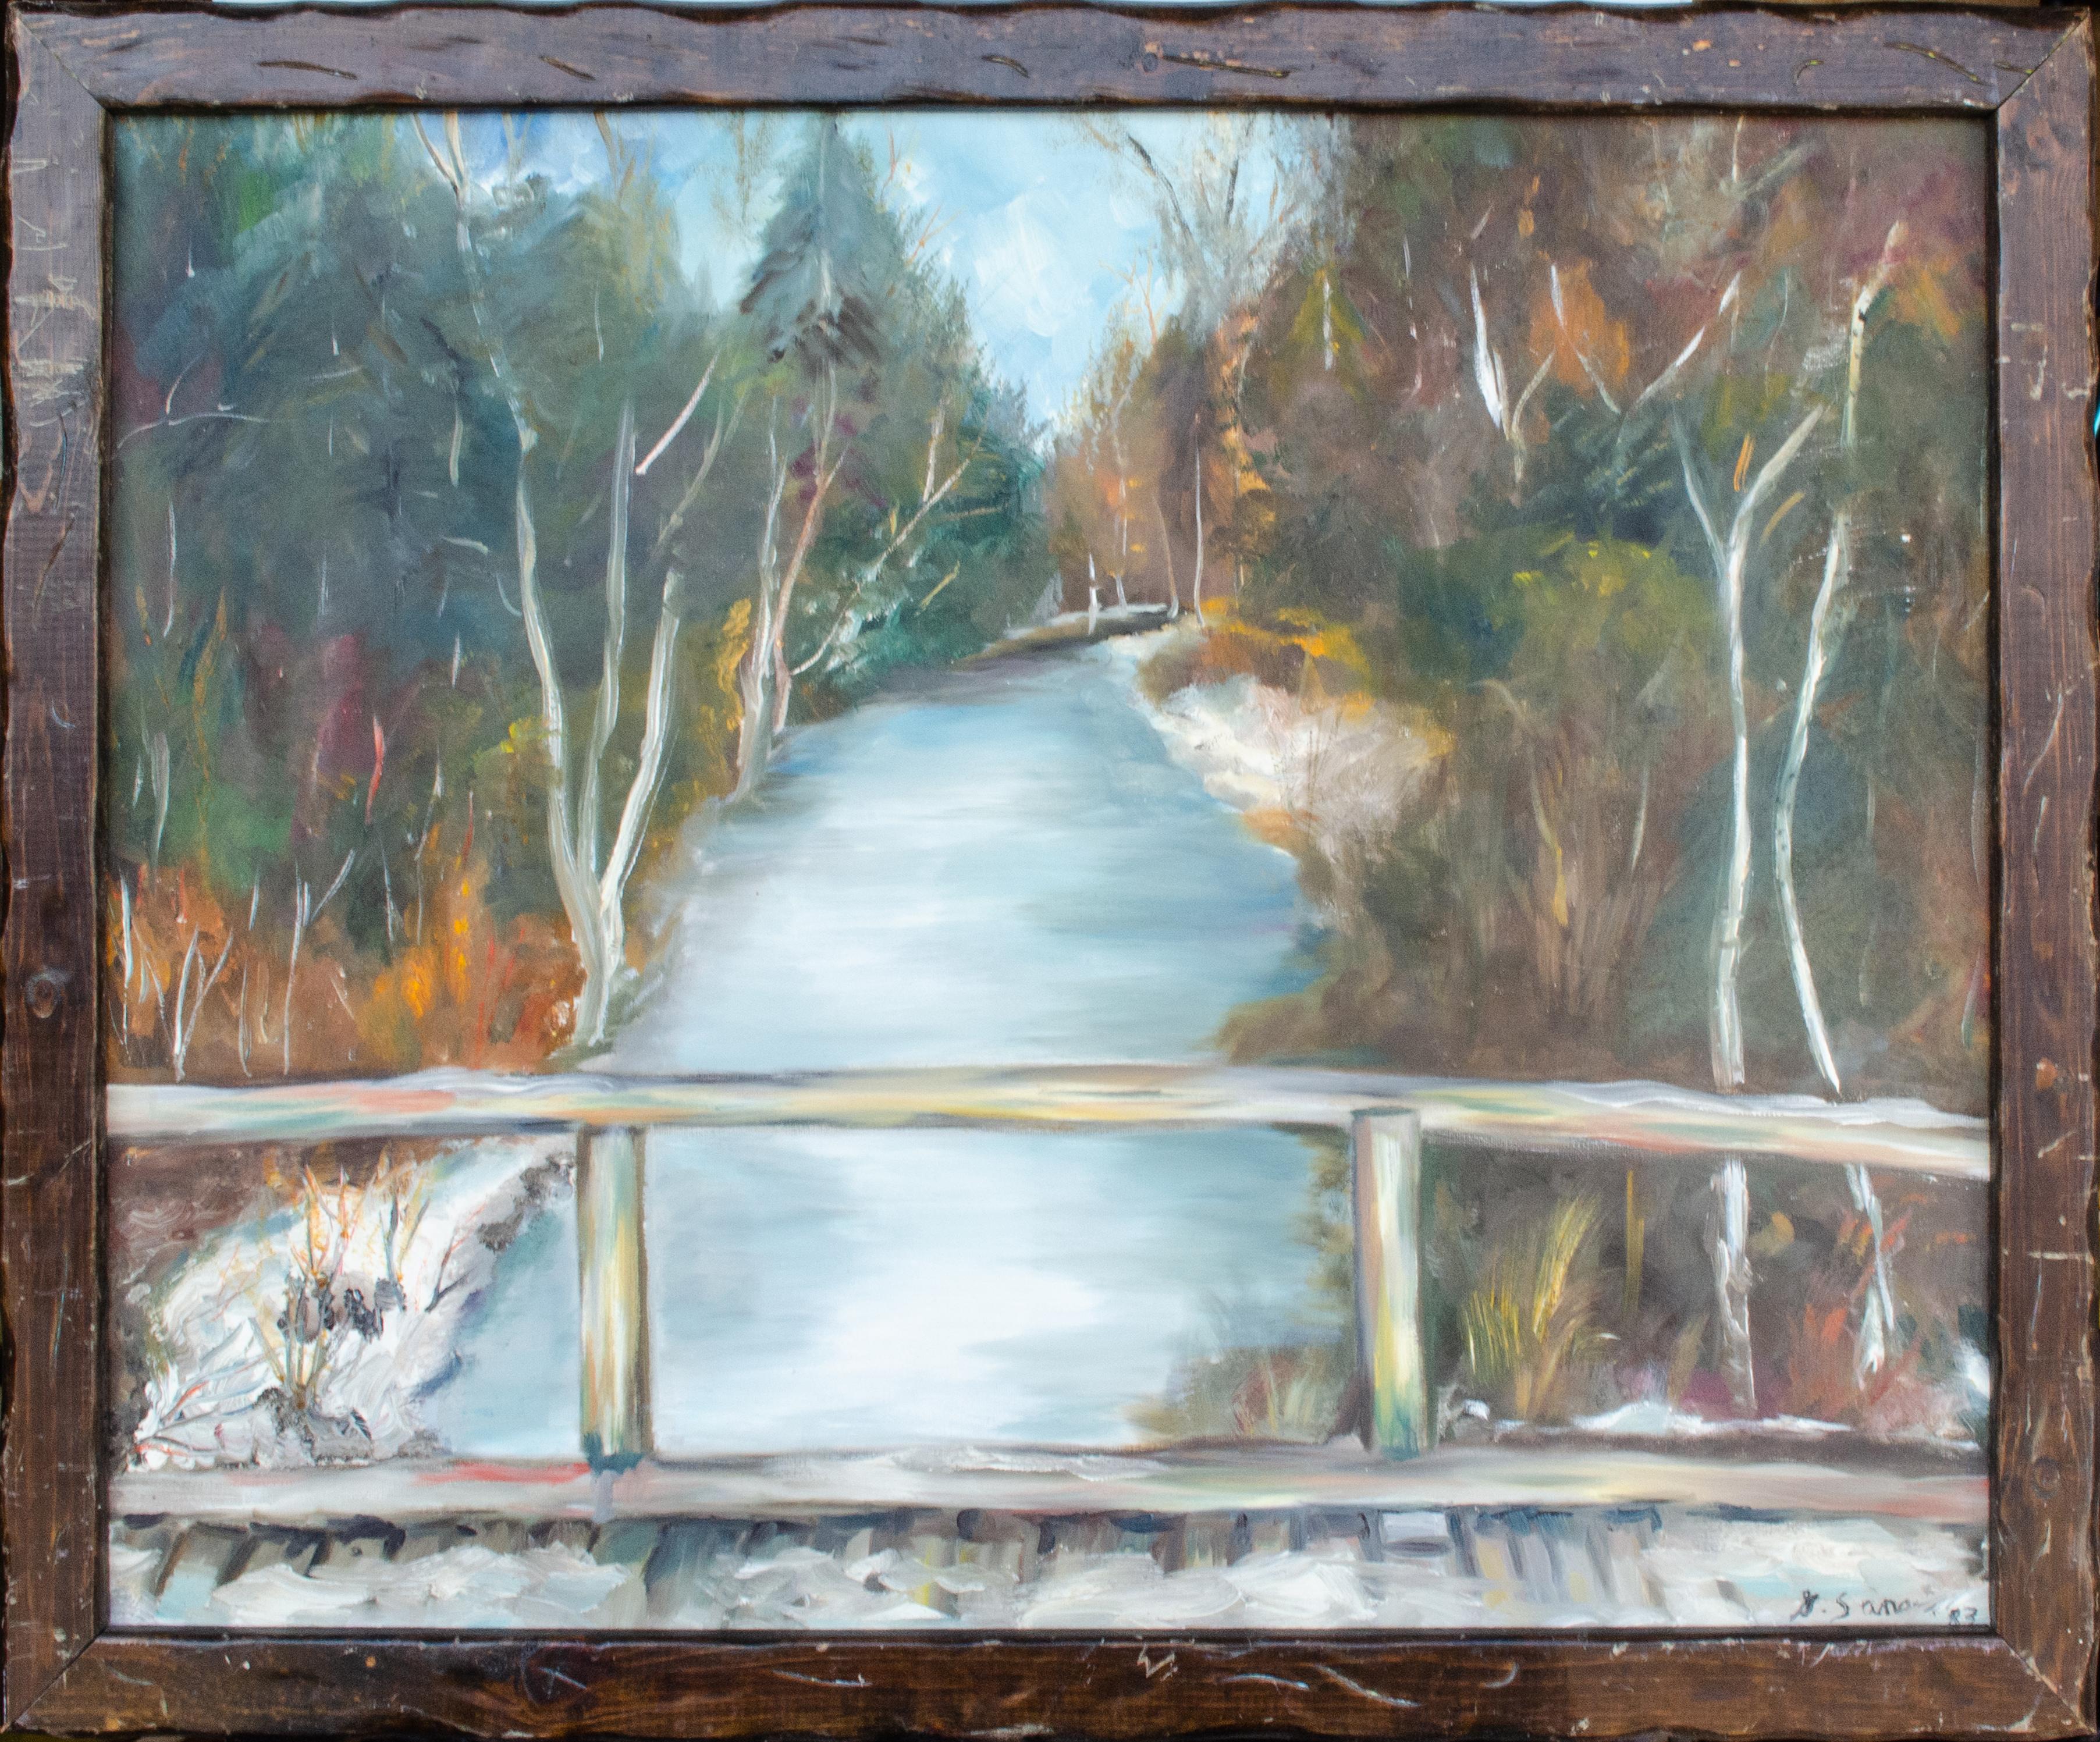 1983 American Impressionist Riverscape by Geraldine Sanger